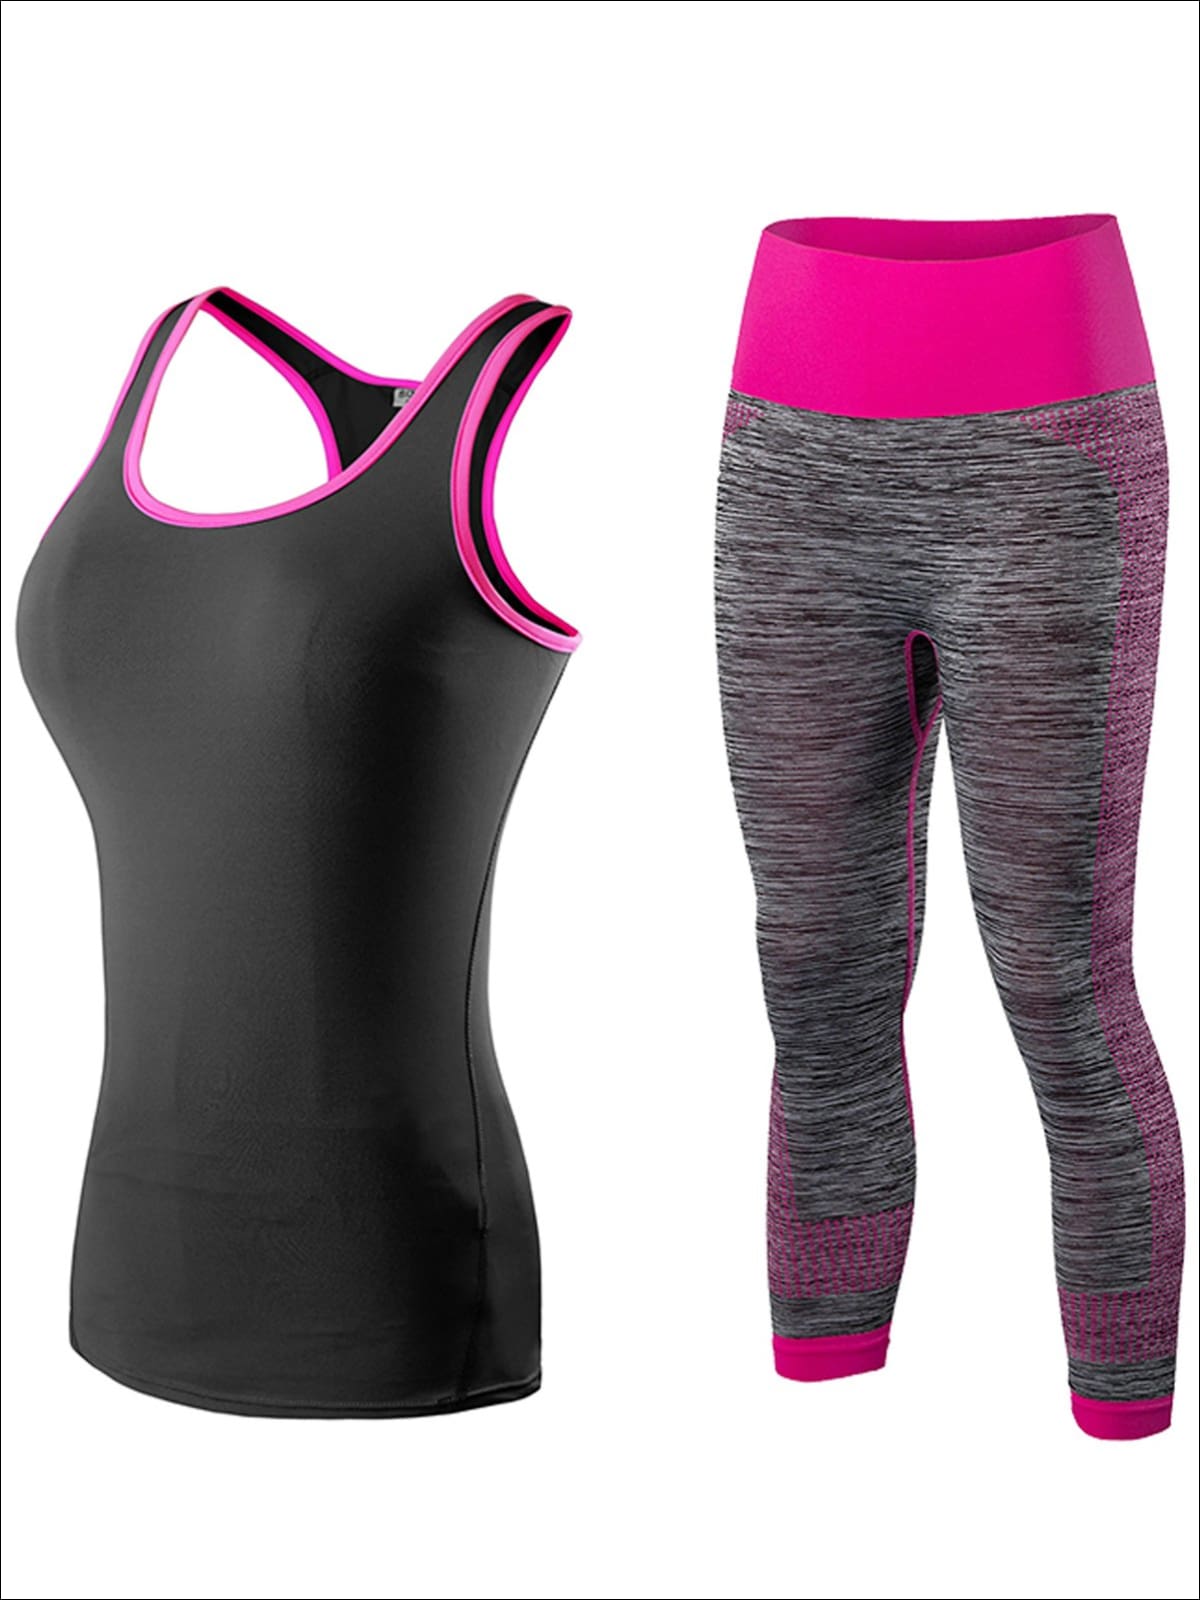 Womens Racerback Top & Marled Capri Leggings Set - Pink/Black / S - Womens Activewear